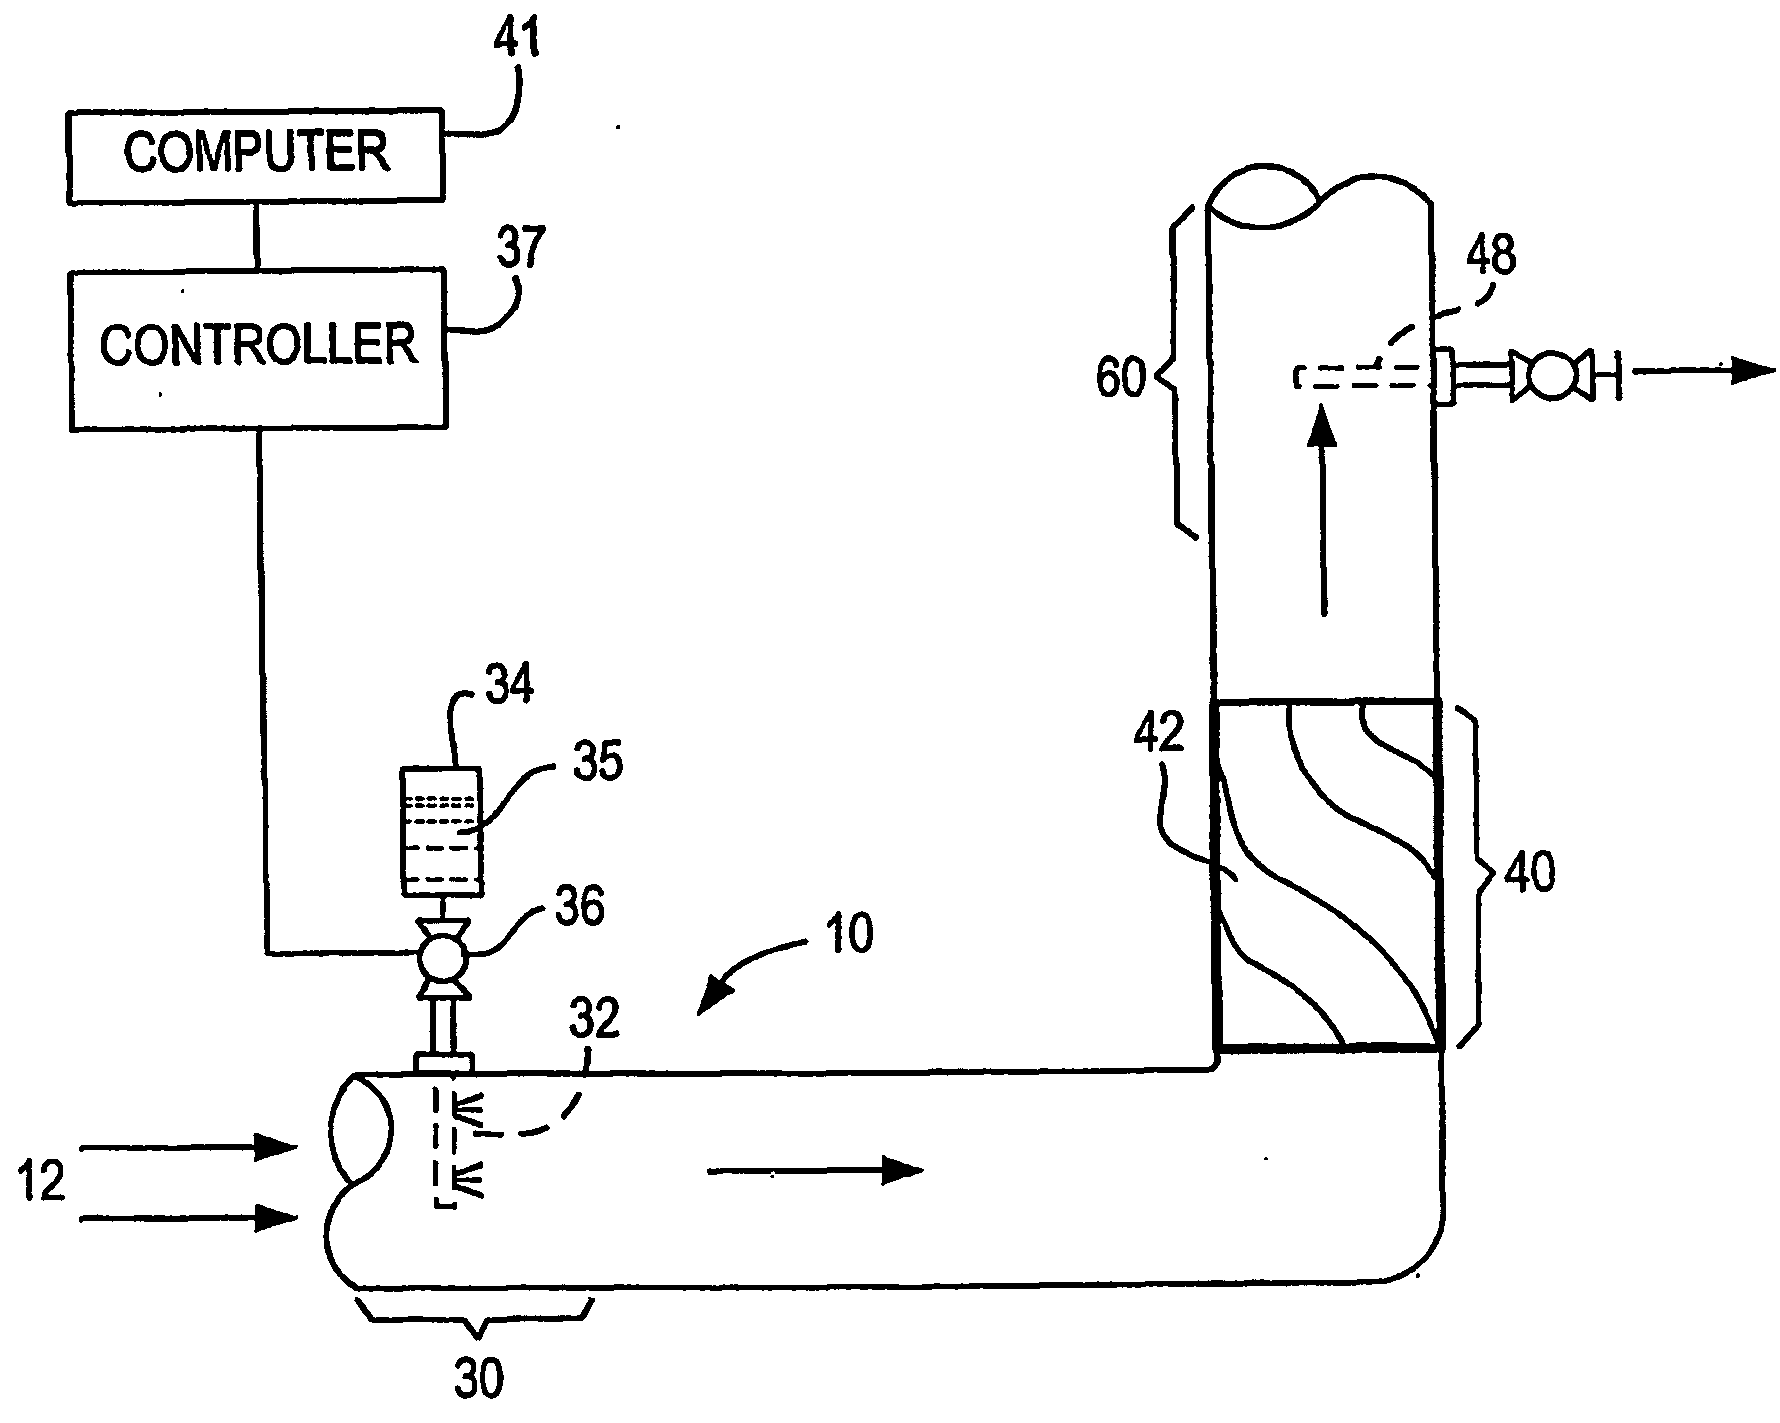 Multi-phase fluid sampling method and apparatus